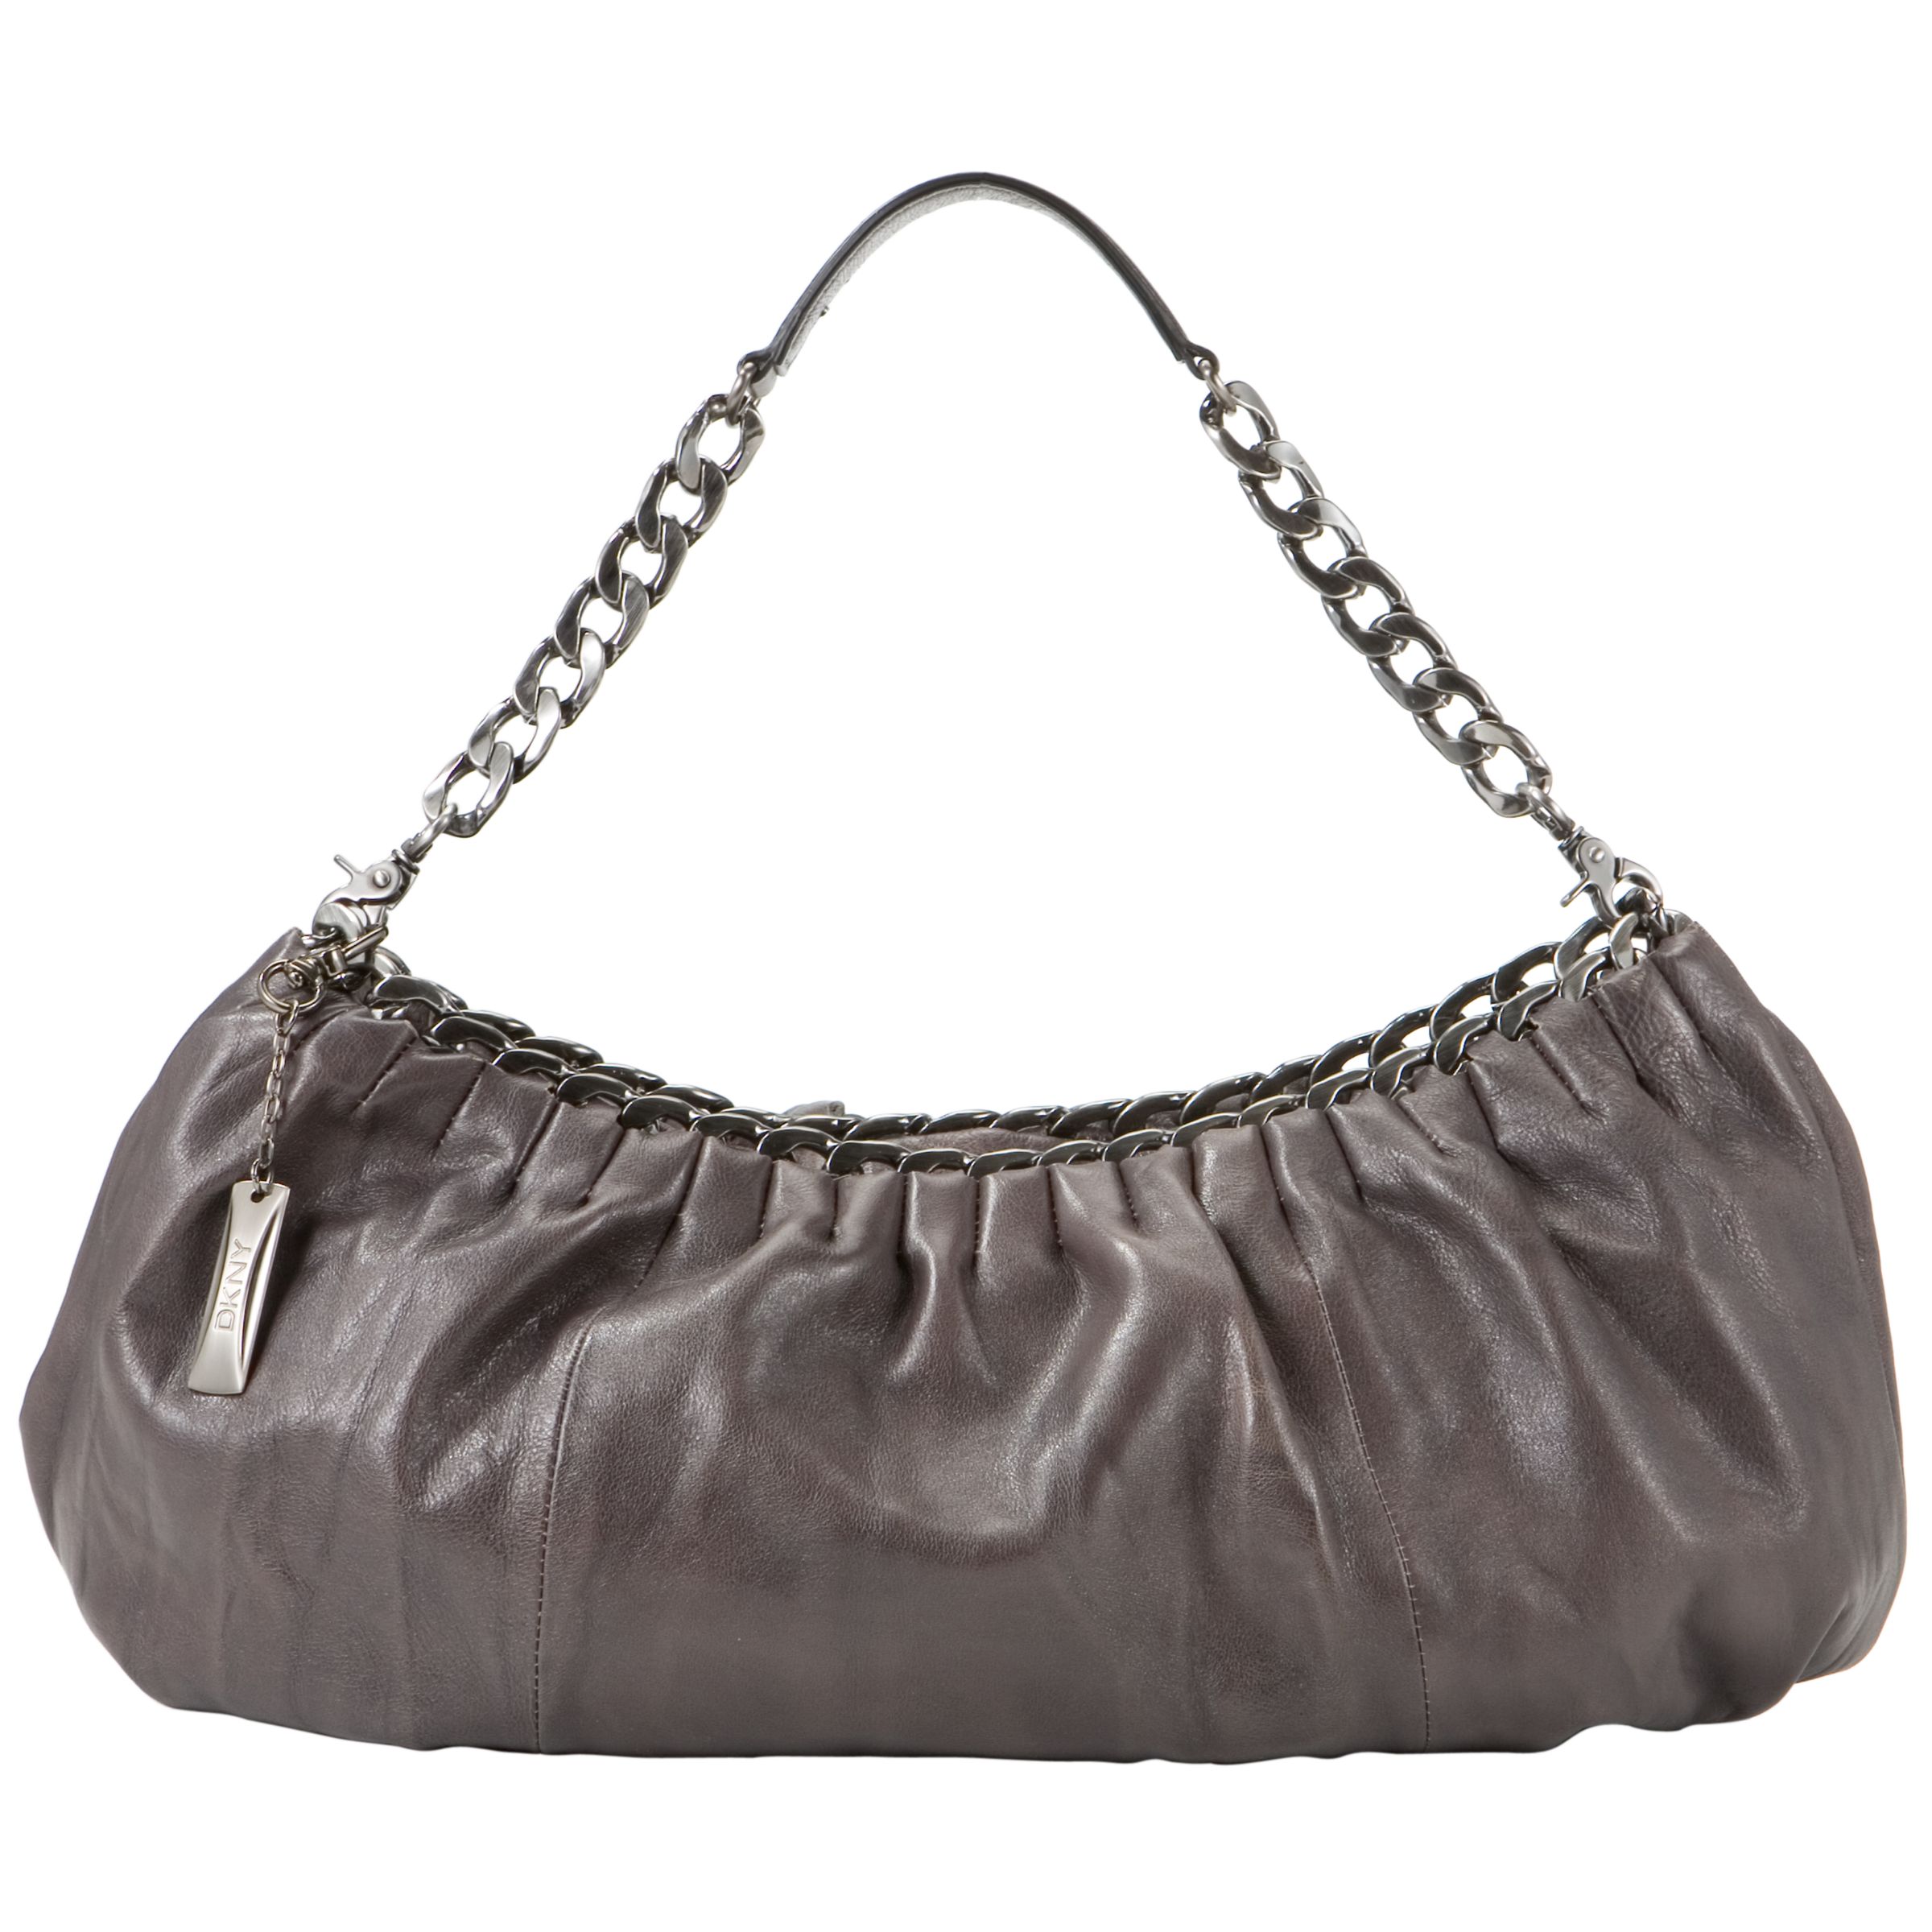 DKNY Burnished Leather Chain Handle East West Hobo Handbag, Grey at JohnLewis